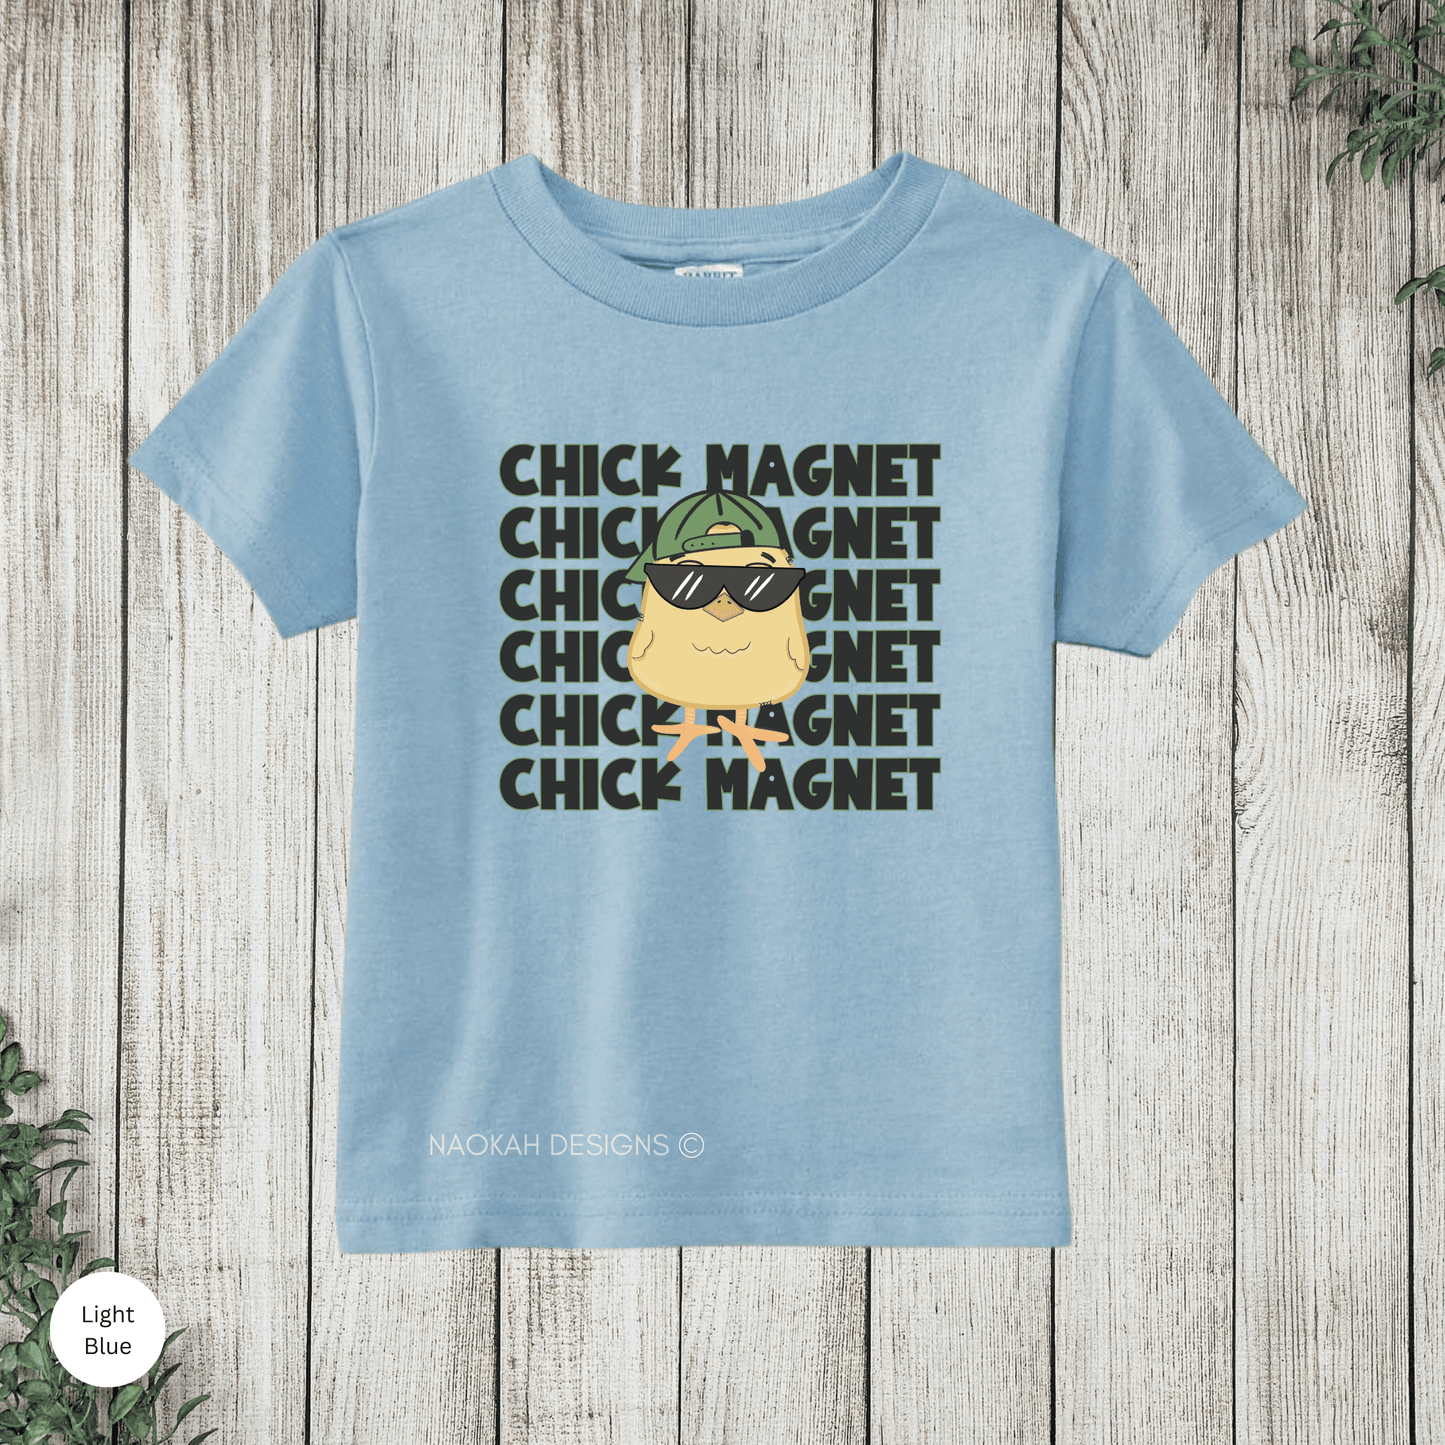 Chick Magnet Shirt, Child's Easter Shirt, Kids Easter Bunny Shirt, Youth Easter Chick Shirt, Easter Toddler Bunny Shirt